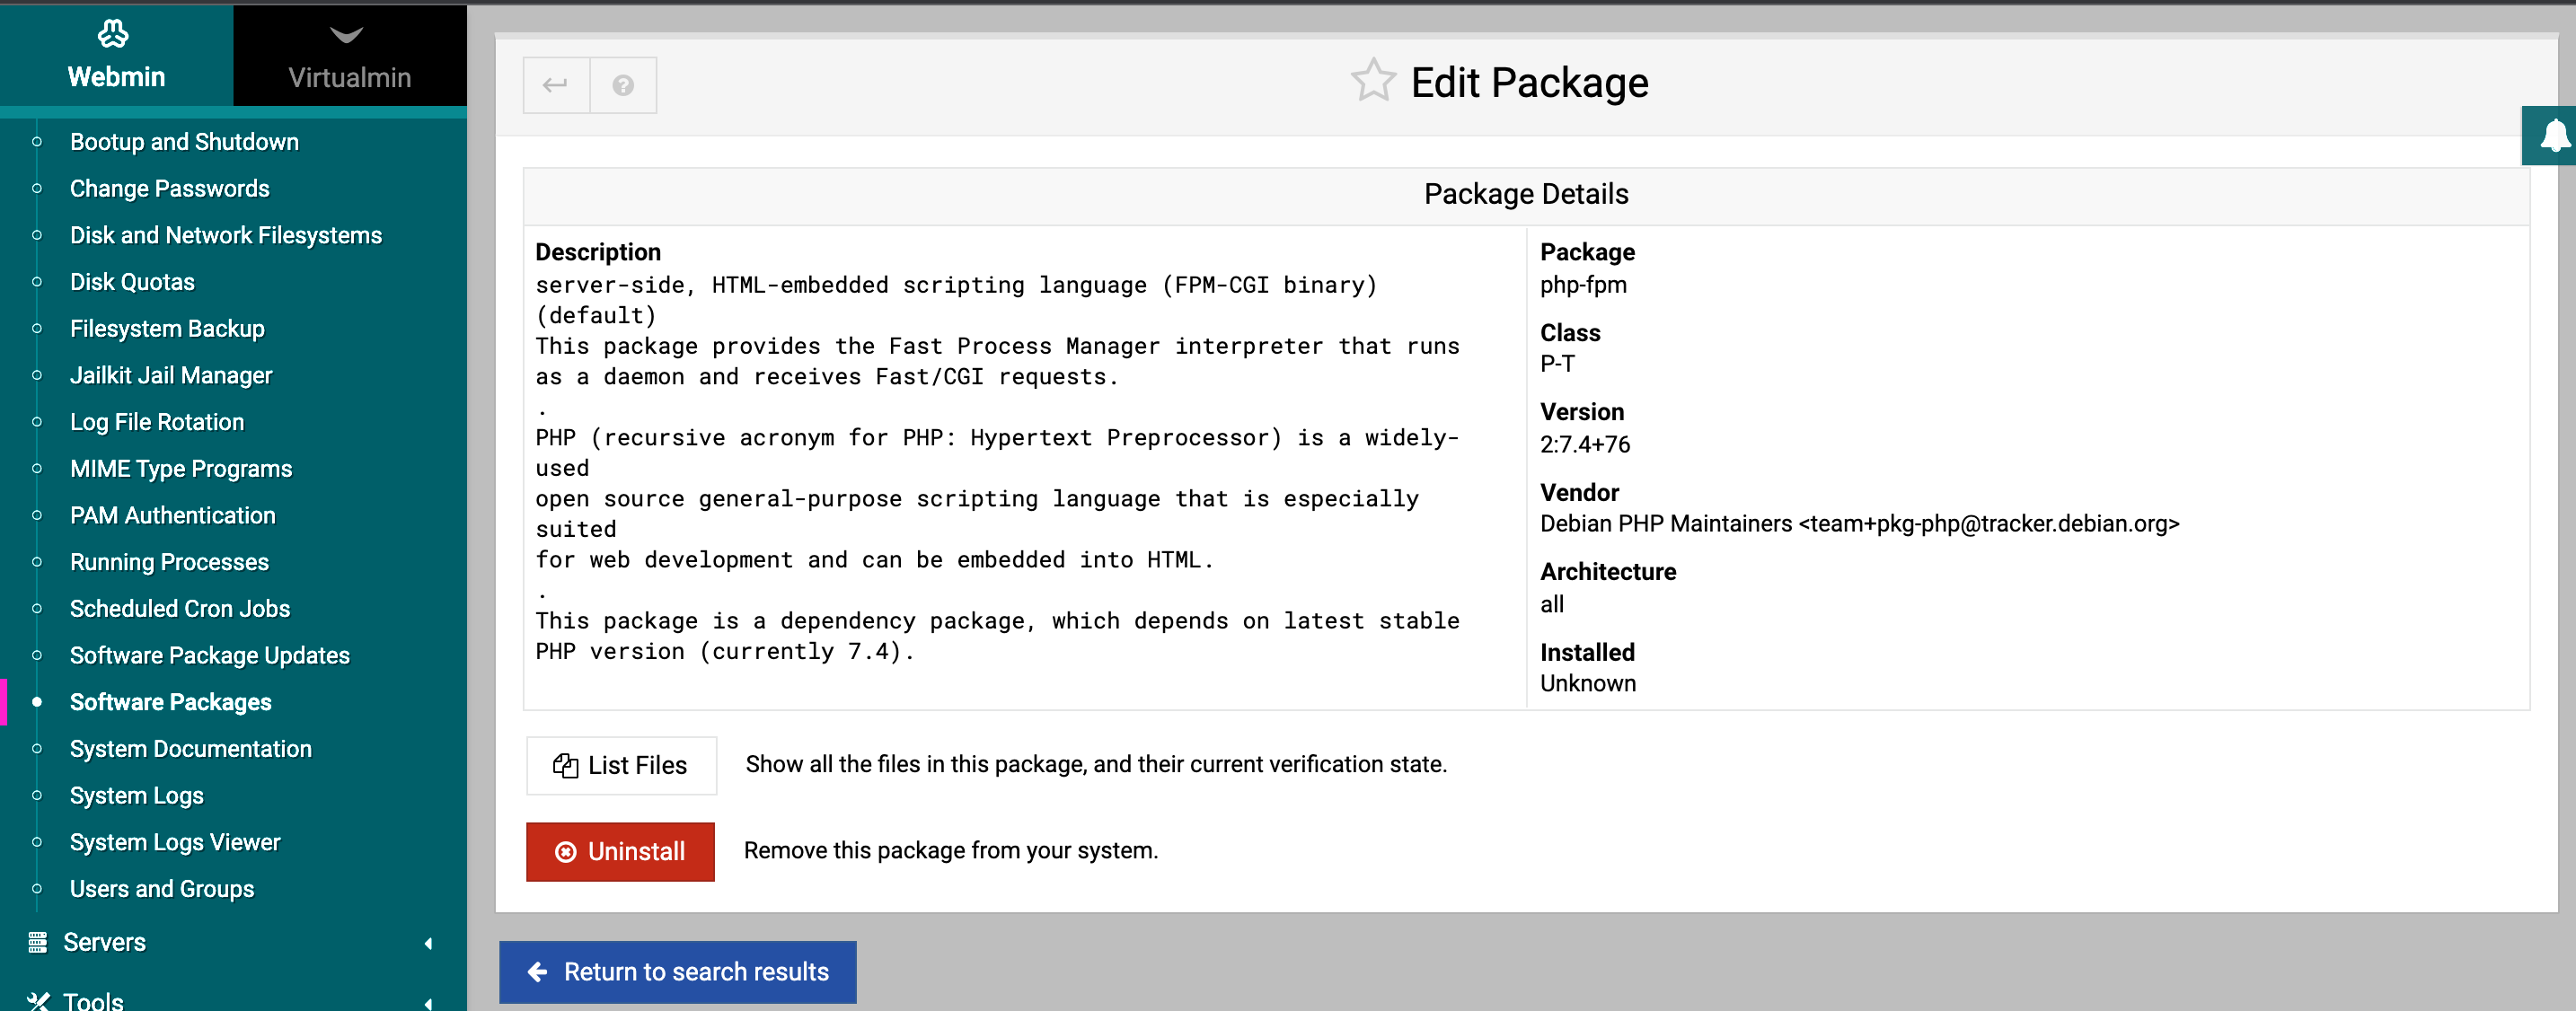 Virtualmin Package DetailS